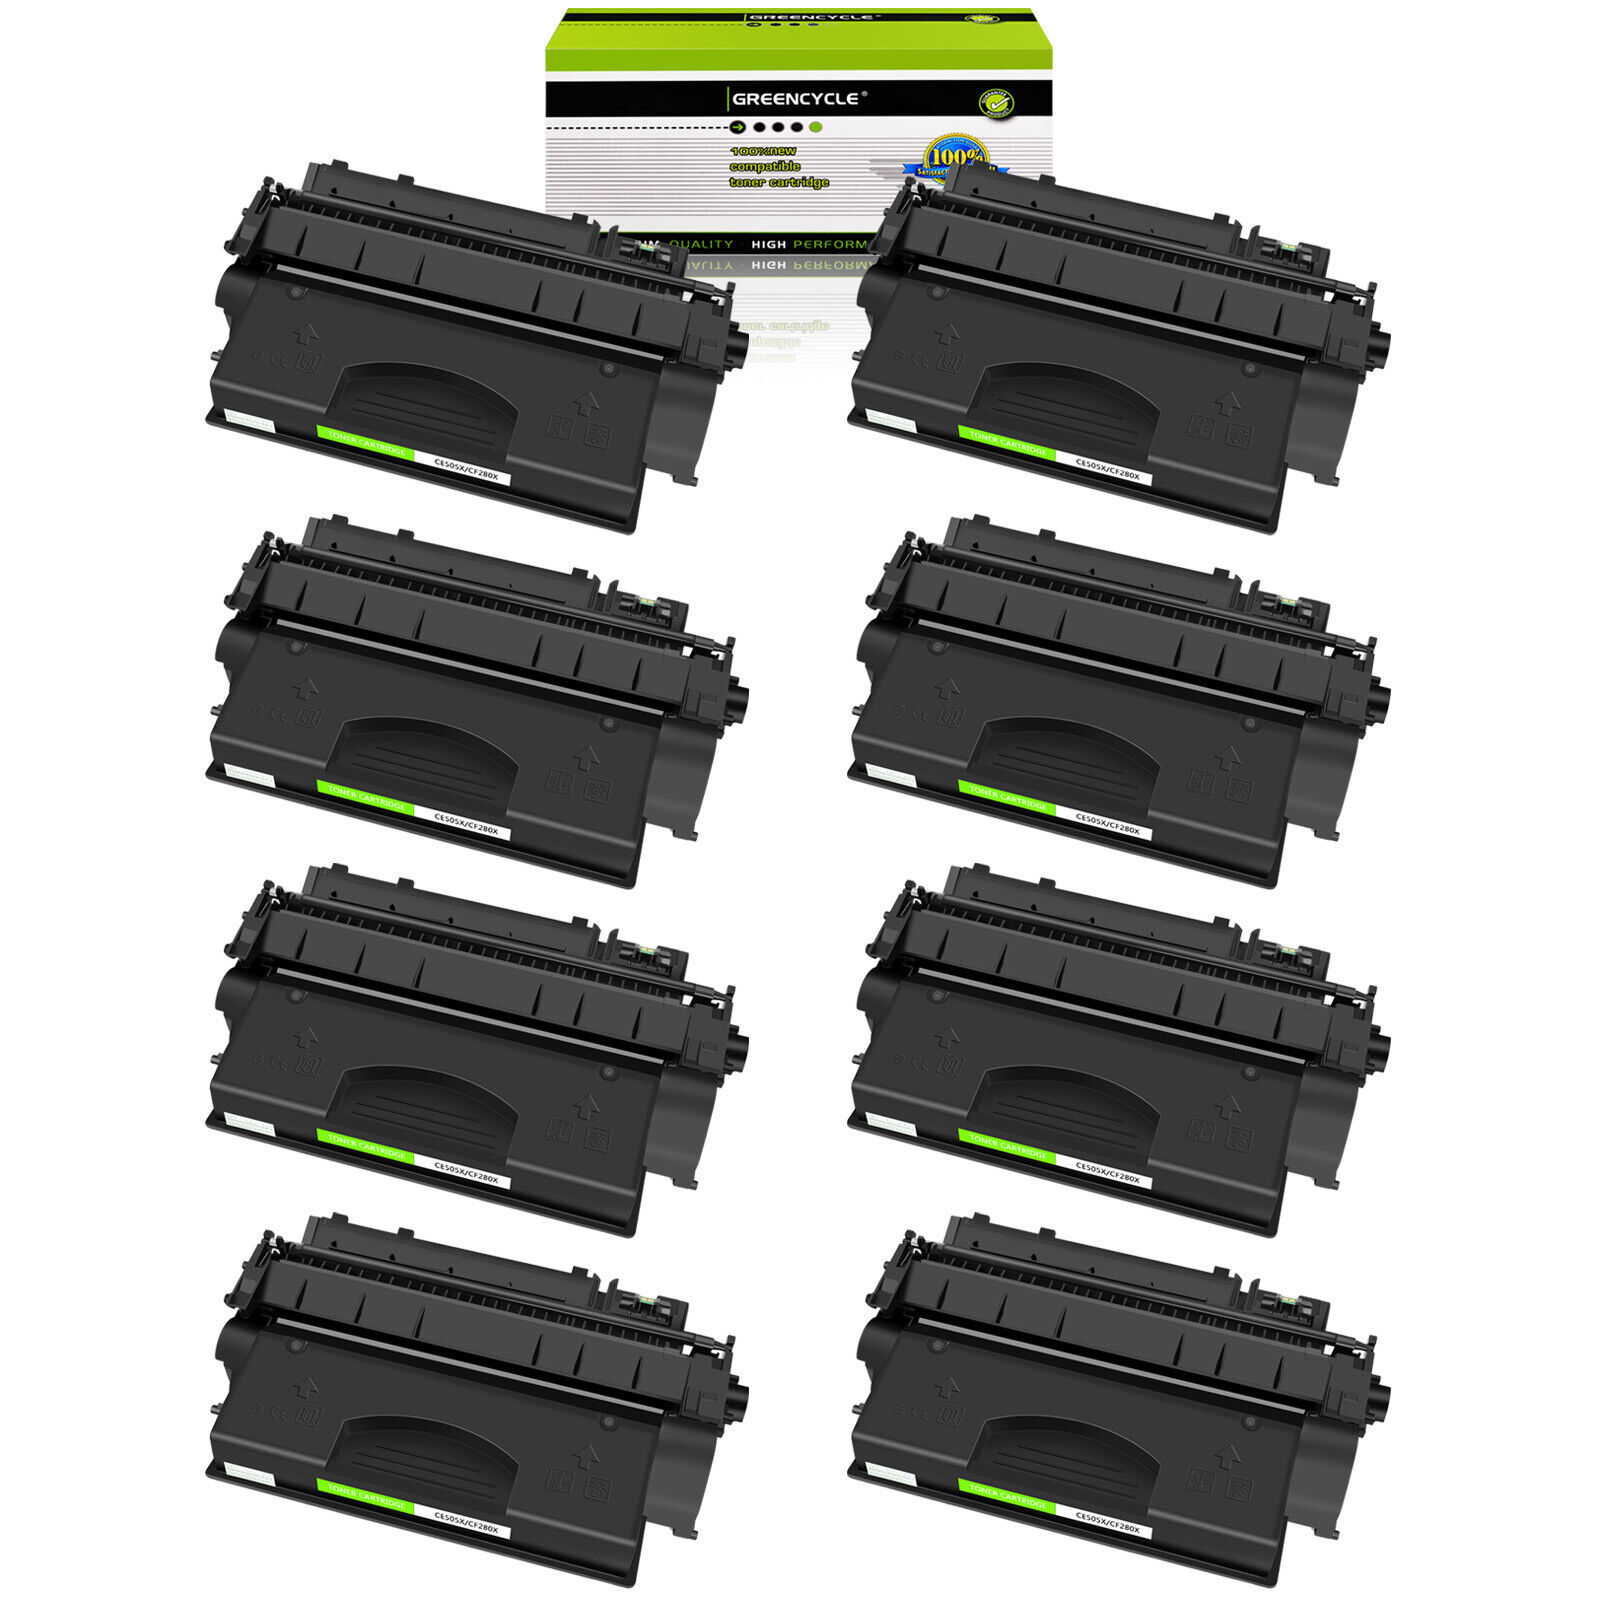 8PK CF280X High Yield Laser Toner Cartridge fit for HP LaserJet Pro 400 M425dn